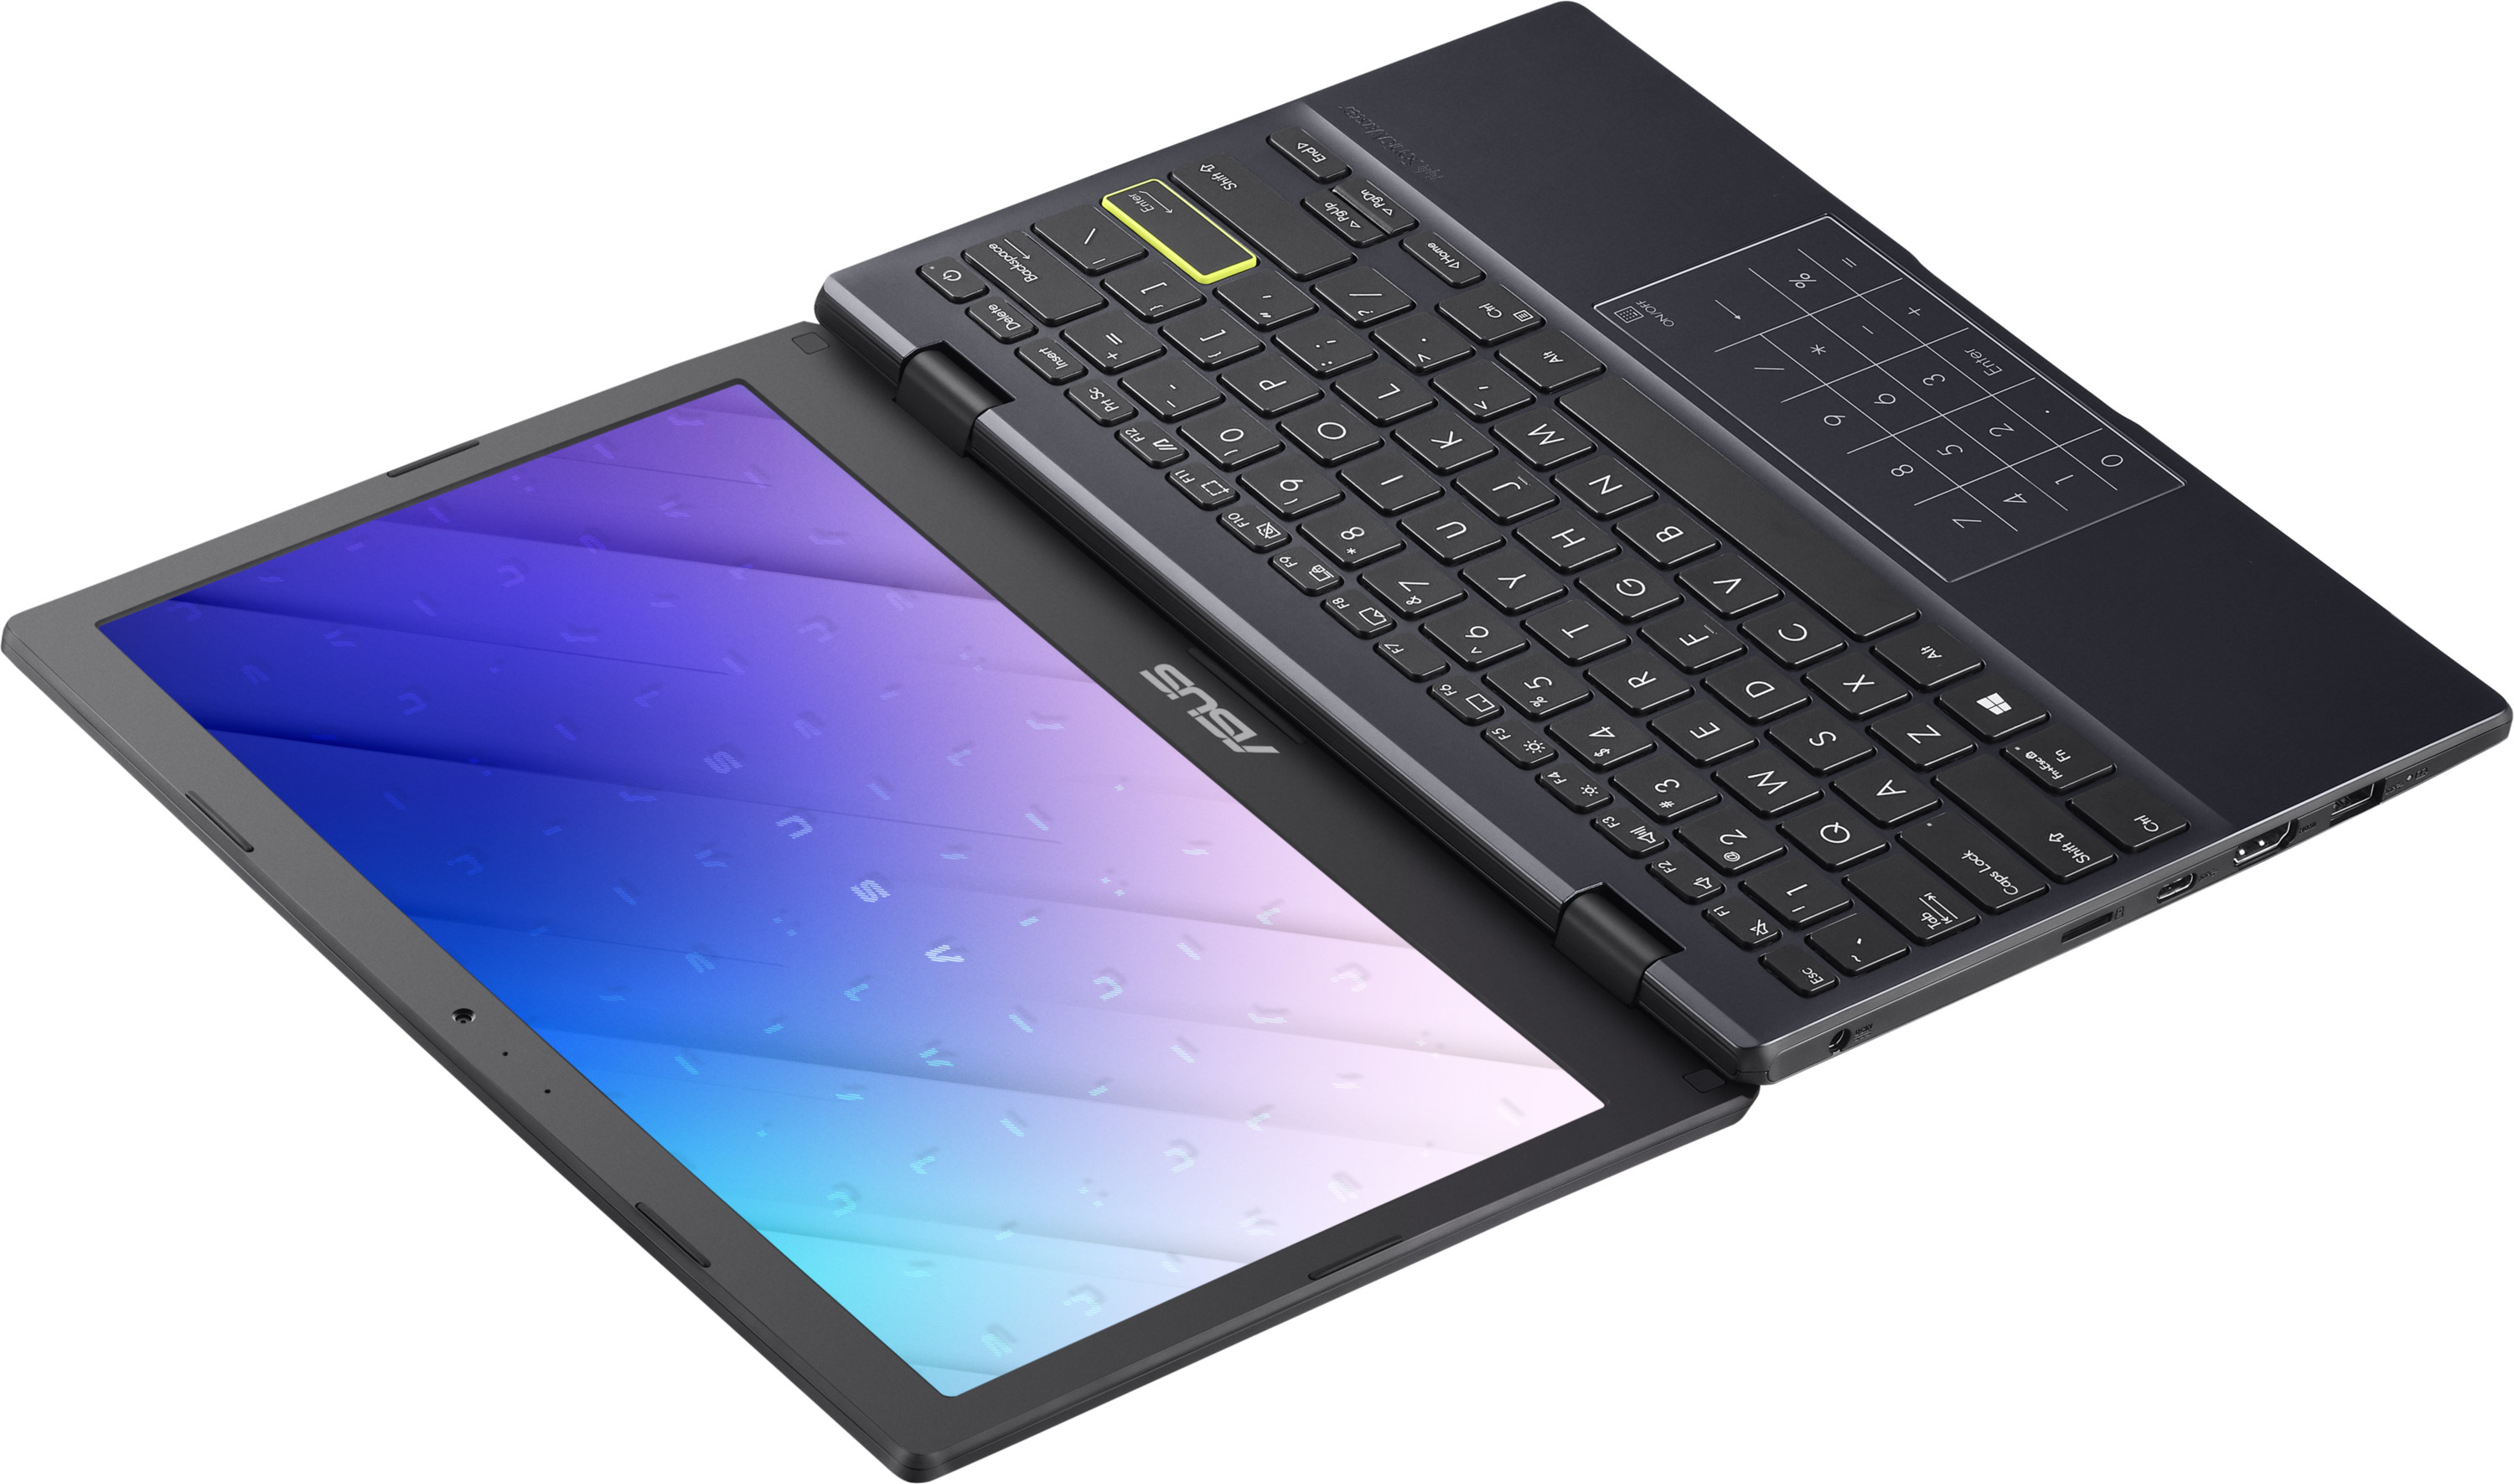 PC Portable Asus VivoBook E210 CELERON 4G 128g SSD Windows 10  (90NB0R44-M003R0)